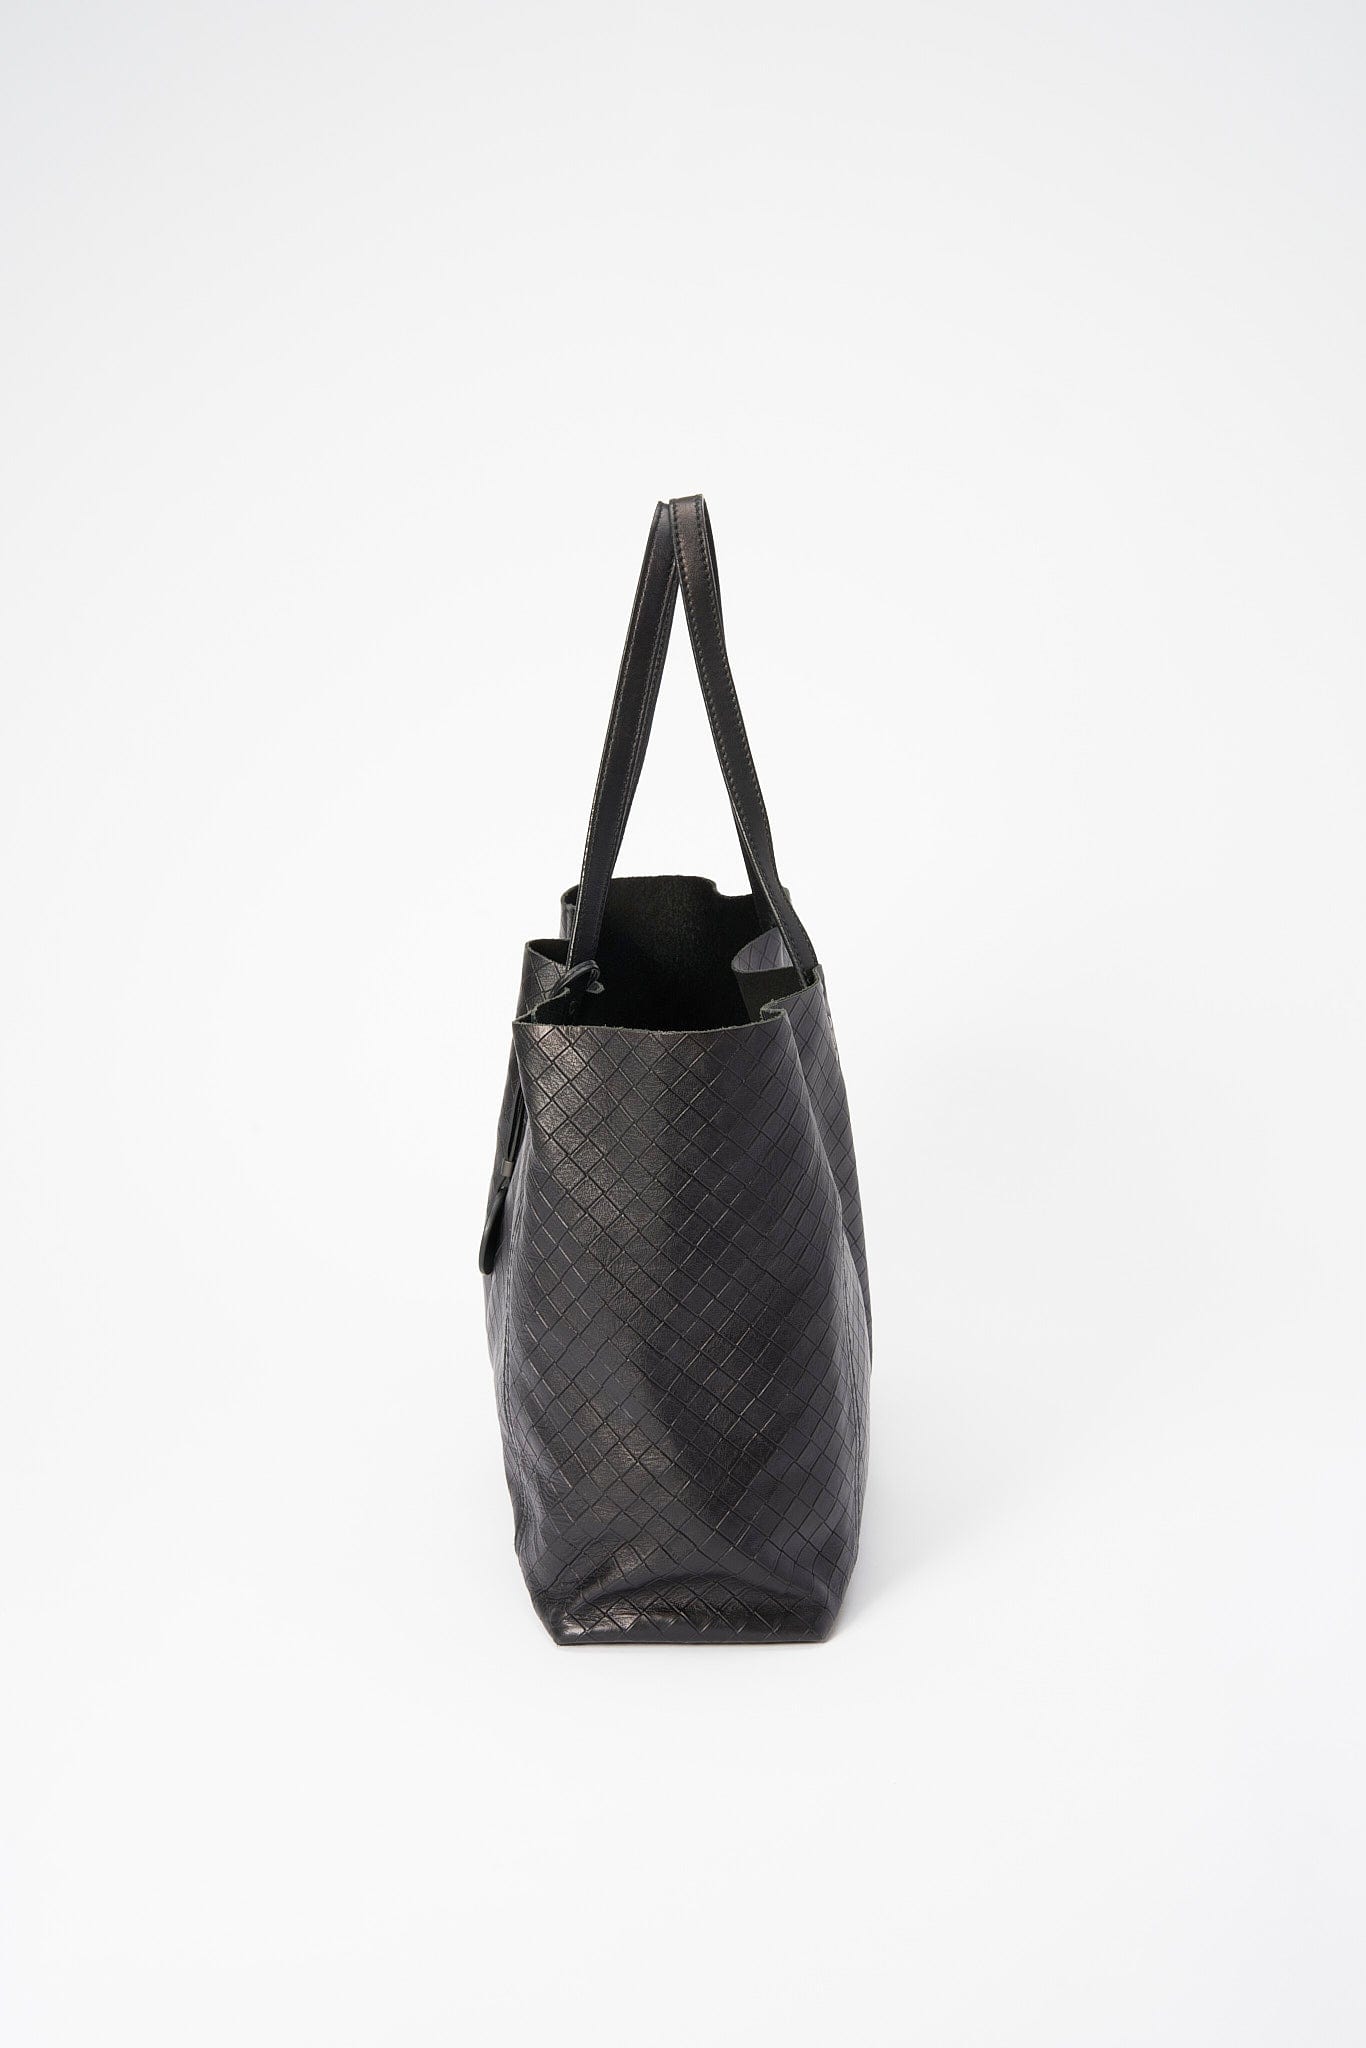 Bottega Veneta Black Leather Tote Bag with Butterfly Charm